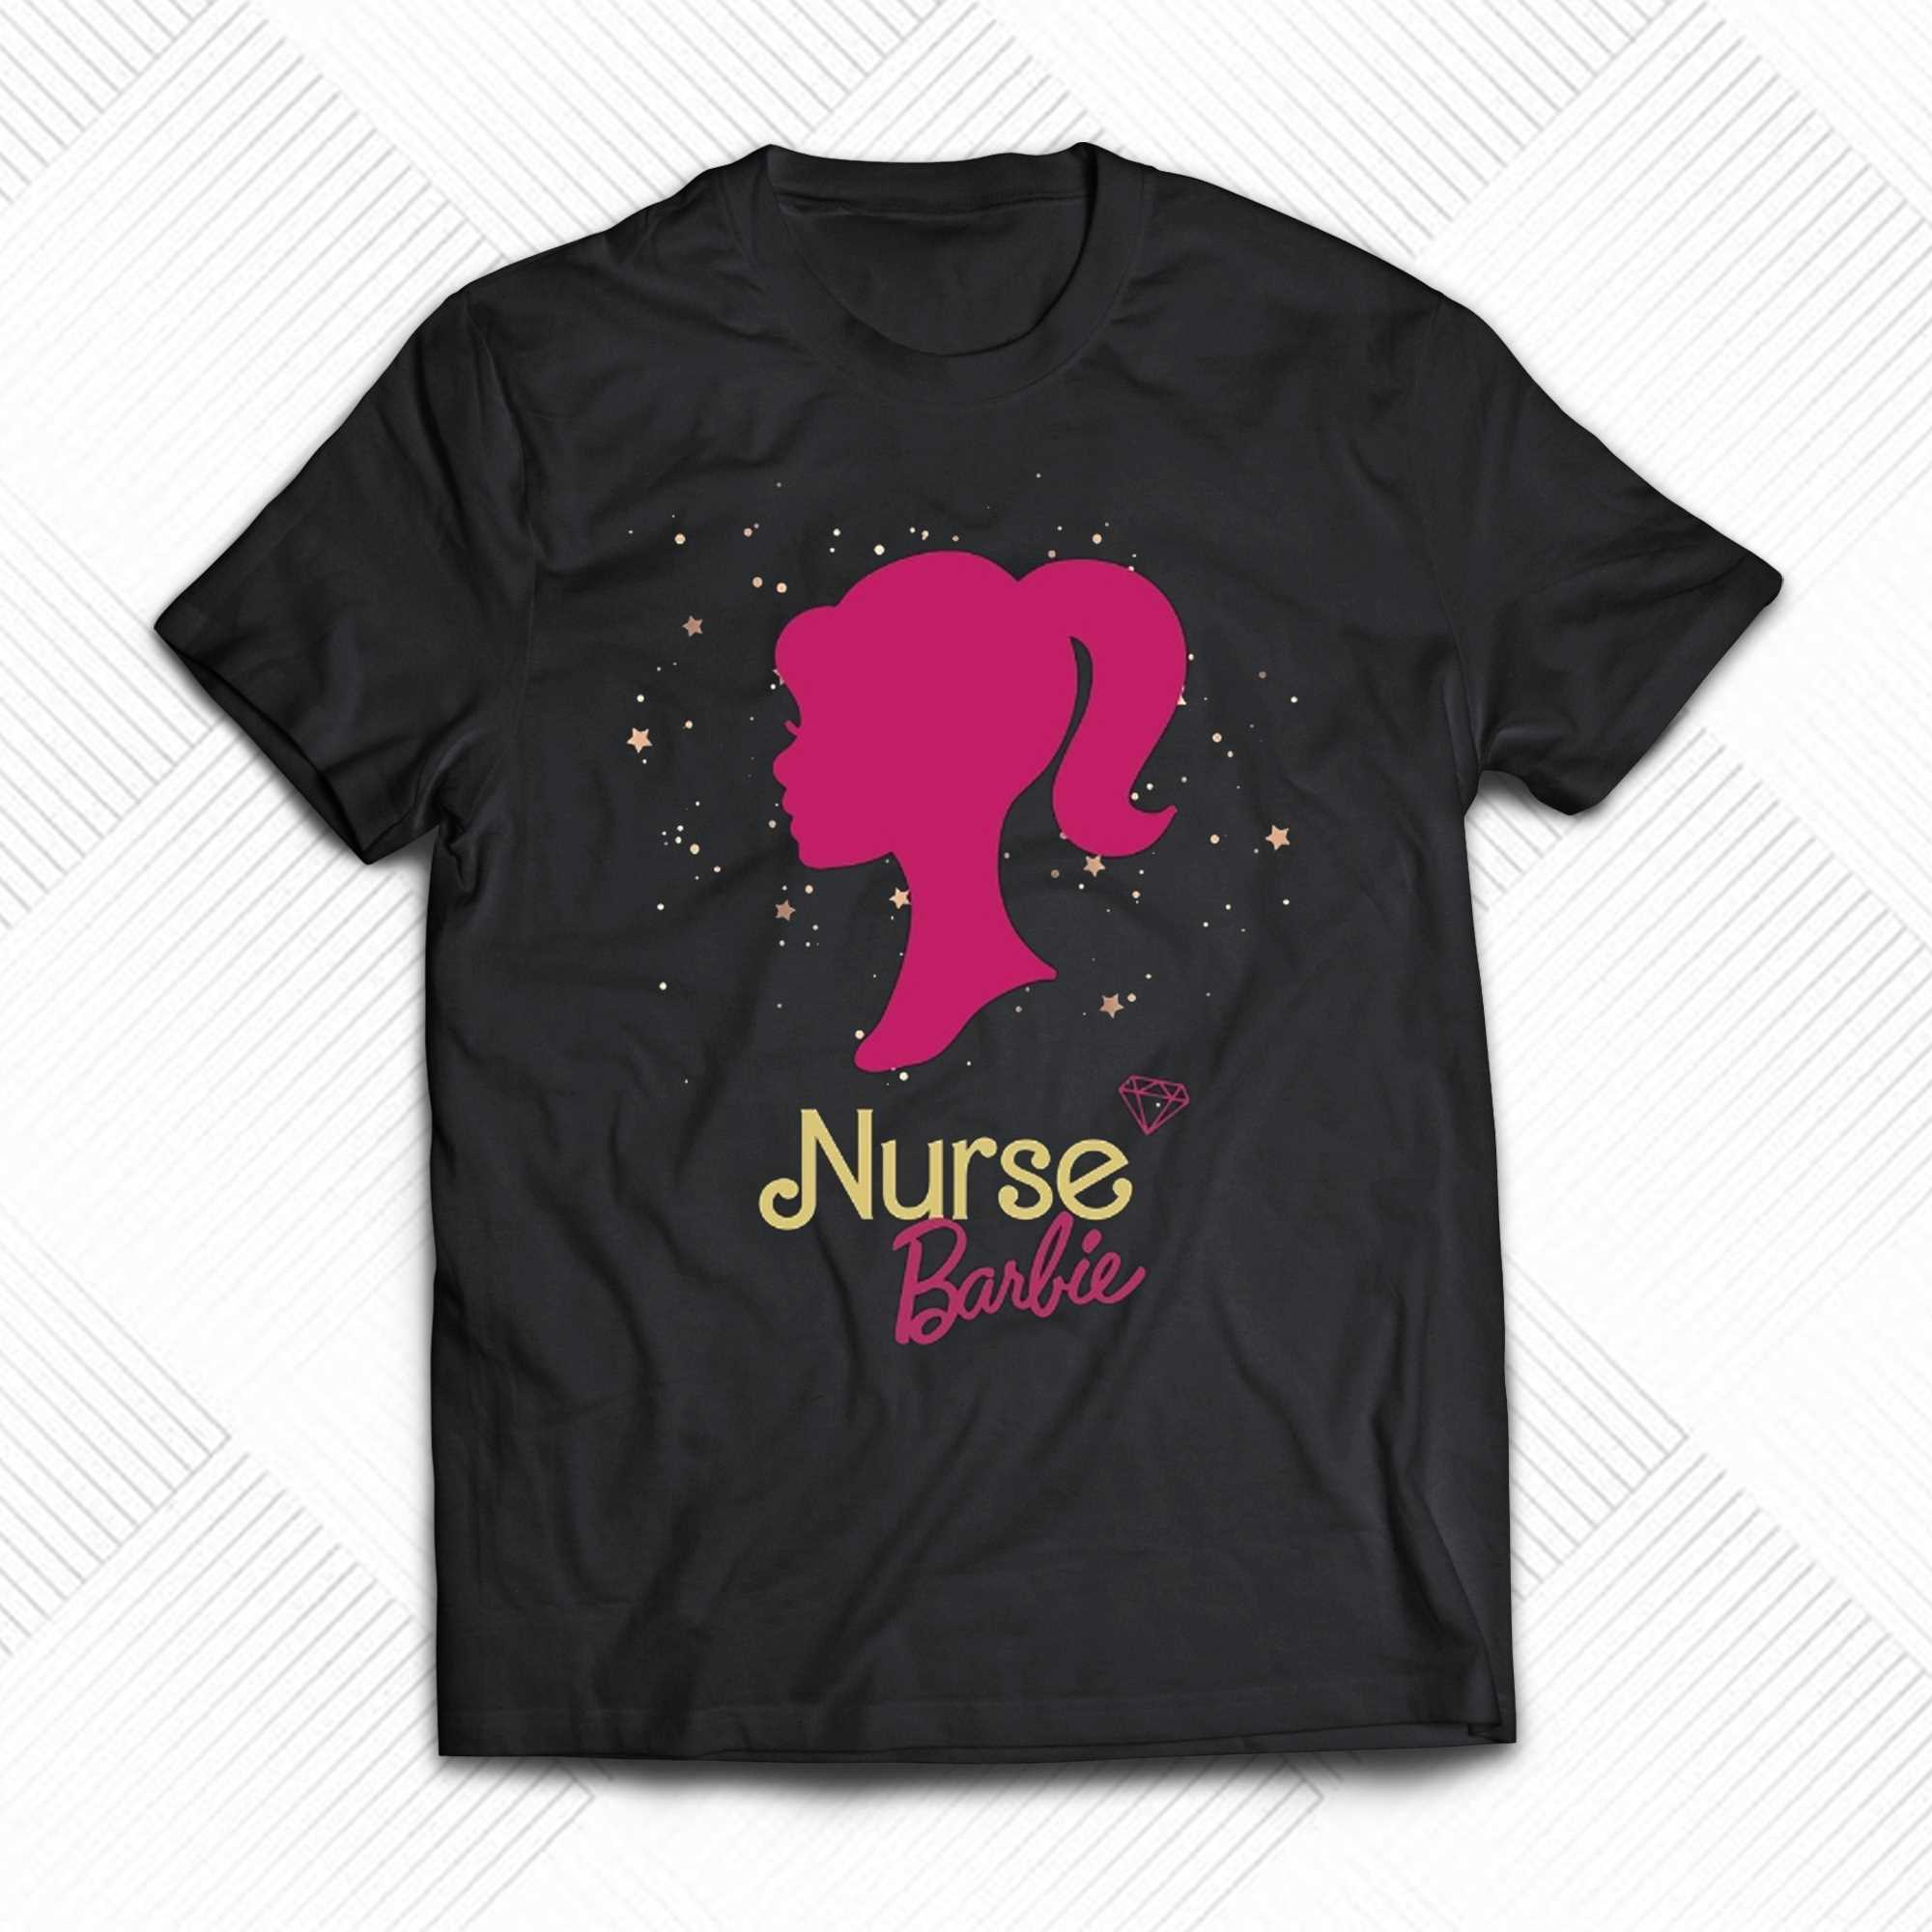 Nurse Barbie Shirt - Shibtee Clothing